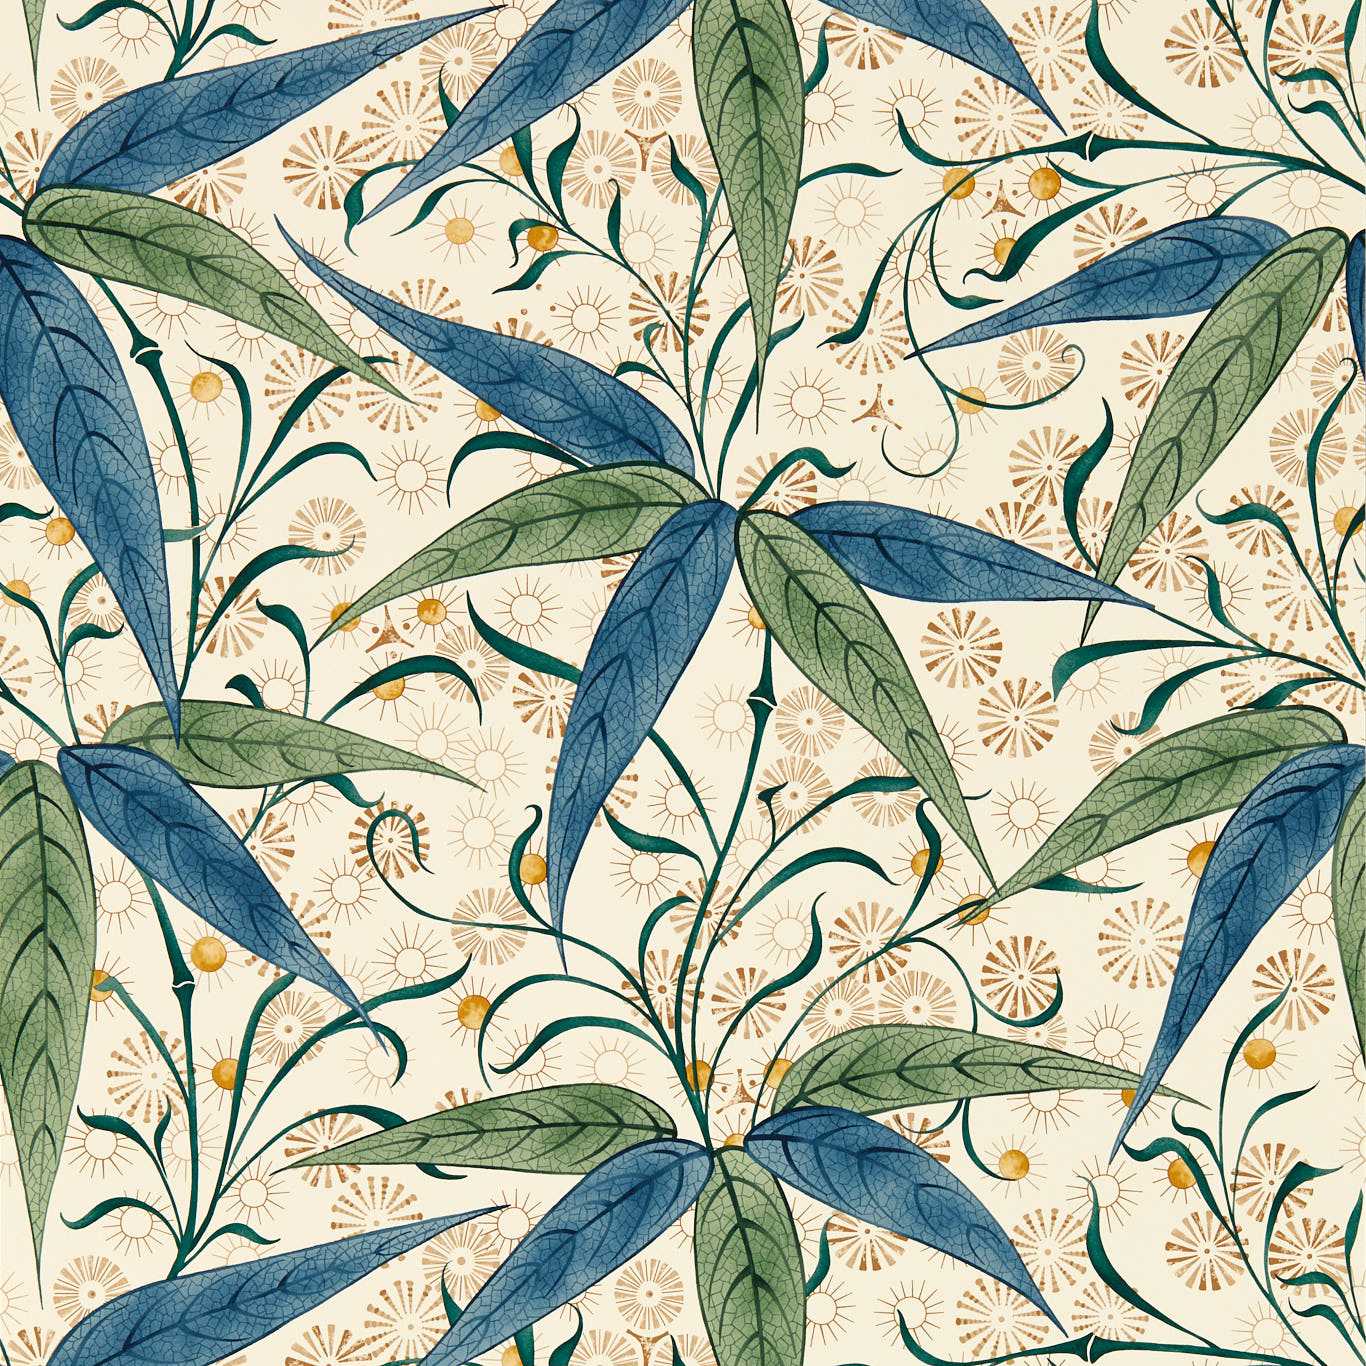 Bamboo Thyme/Artichoke Wallpaper MFRW217357 by Morris & Co